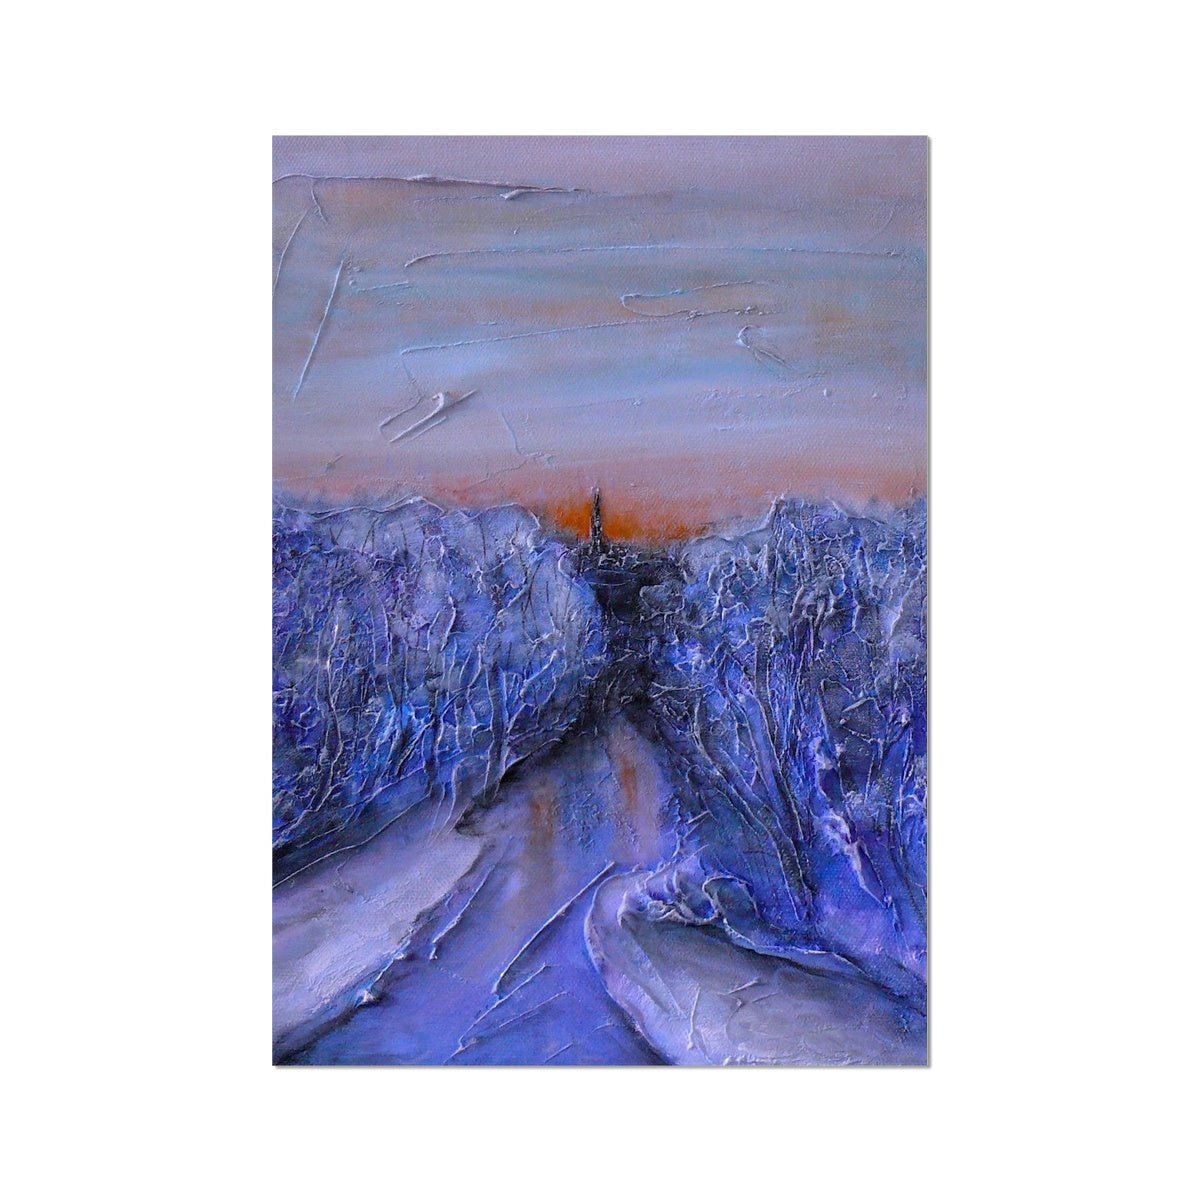 A Frozen River Kelvin Painting | Fine Art Prints From Scotland-Unframed Prints-Edinburgh & Glasgow Art Gallery-A2 Portrait-Paintings, Prints, Homeware, Art Gifts From Scotland By Scottish Artist Kevin Hunter